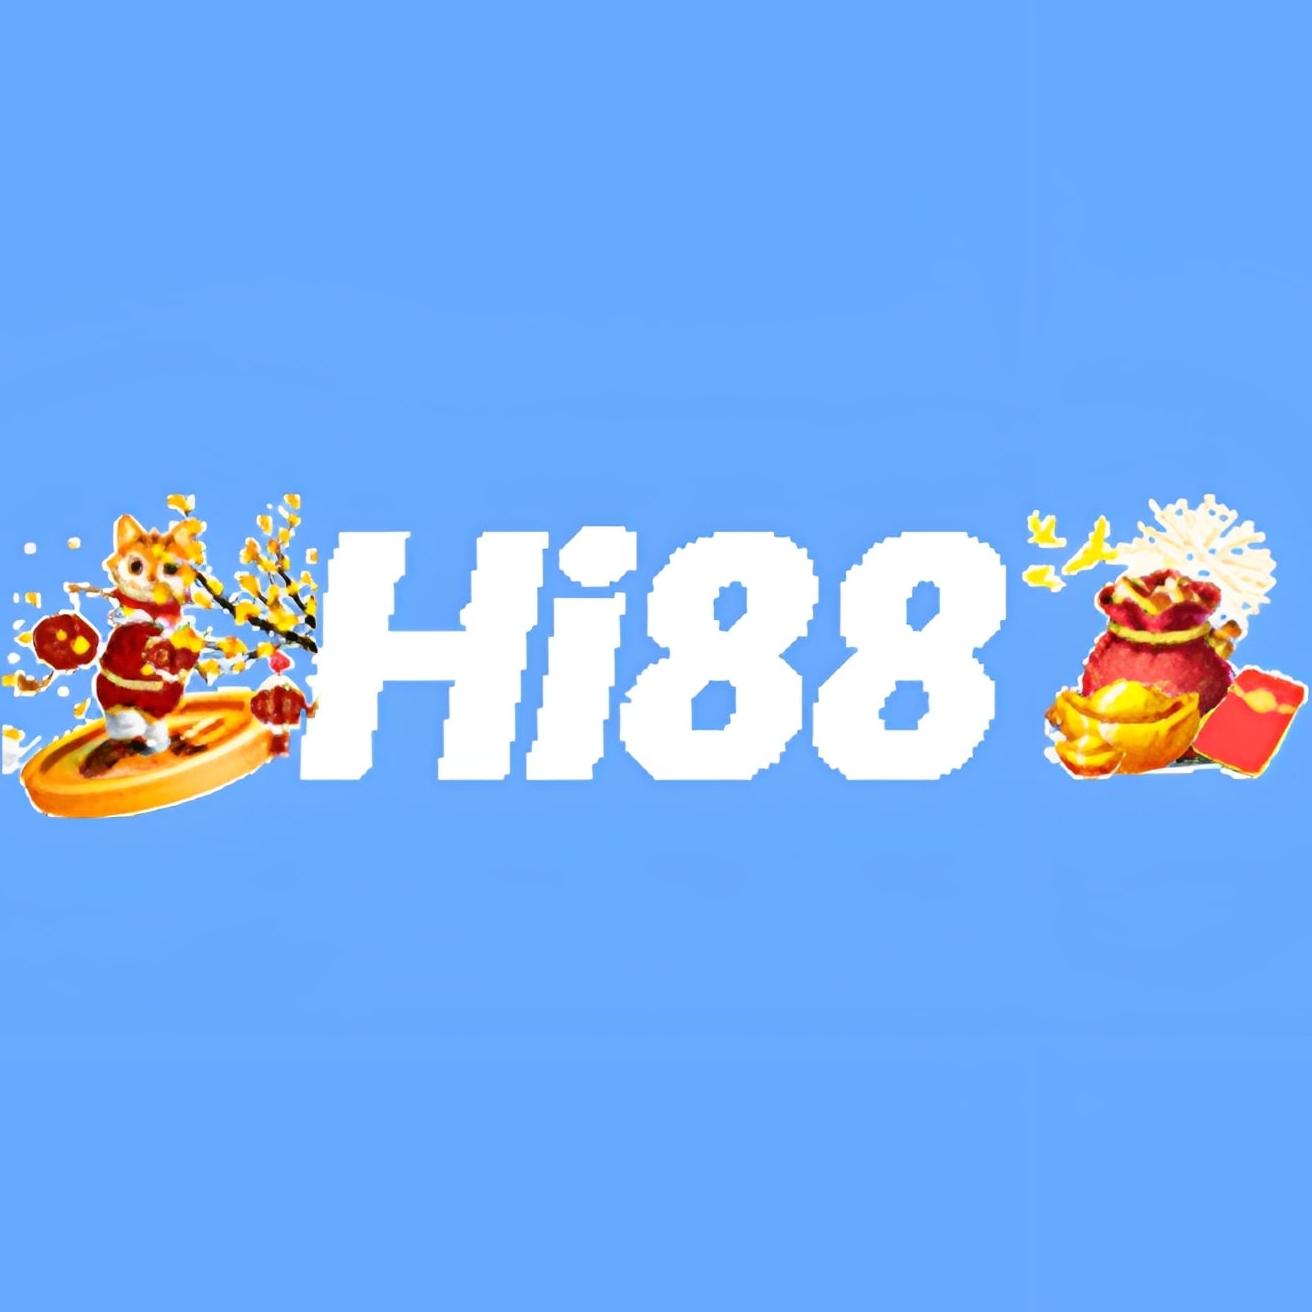 Hi88  Football